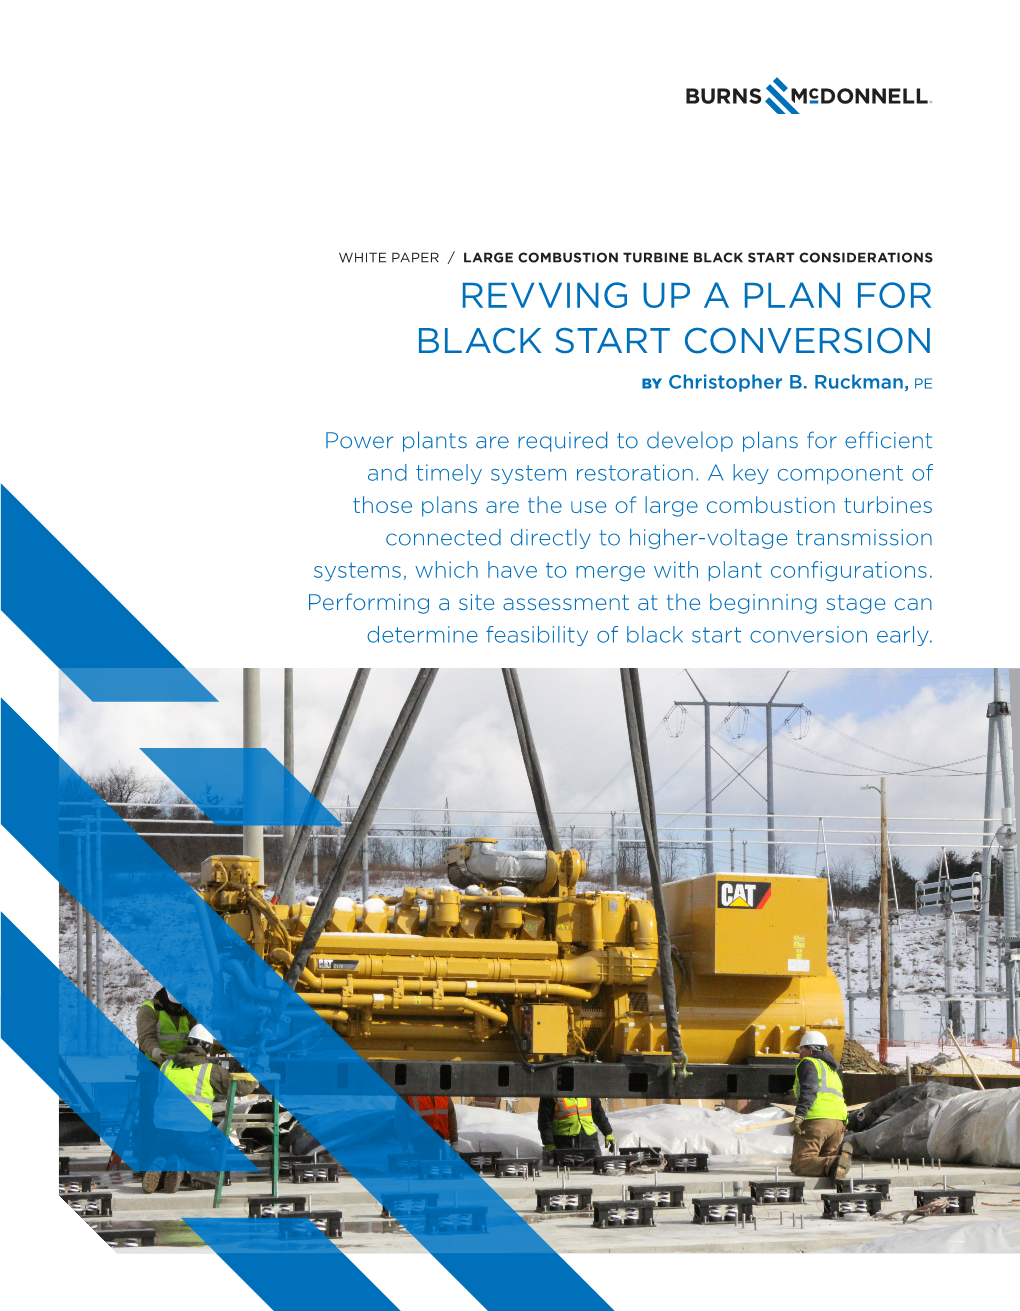 Revving up a Plan for Black Start Conversion